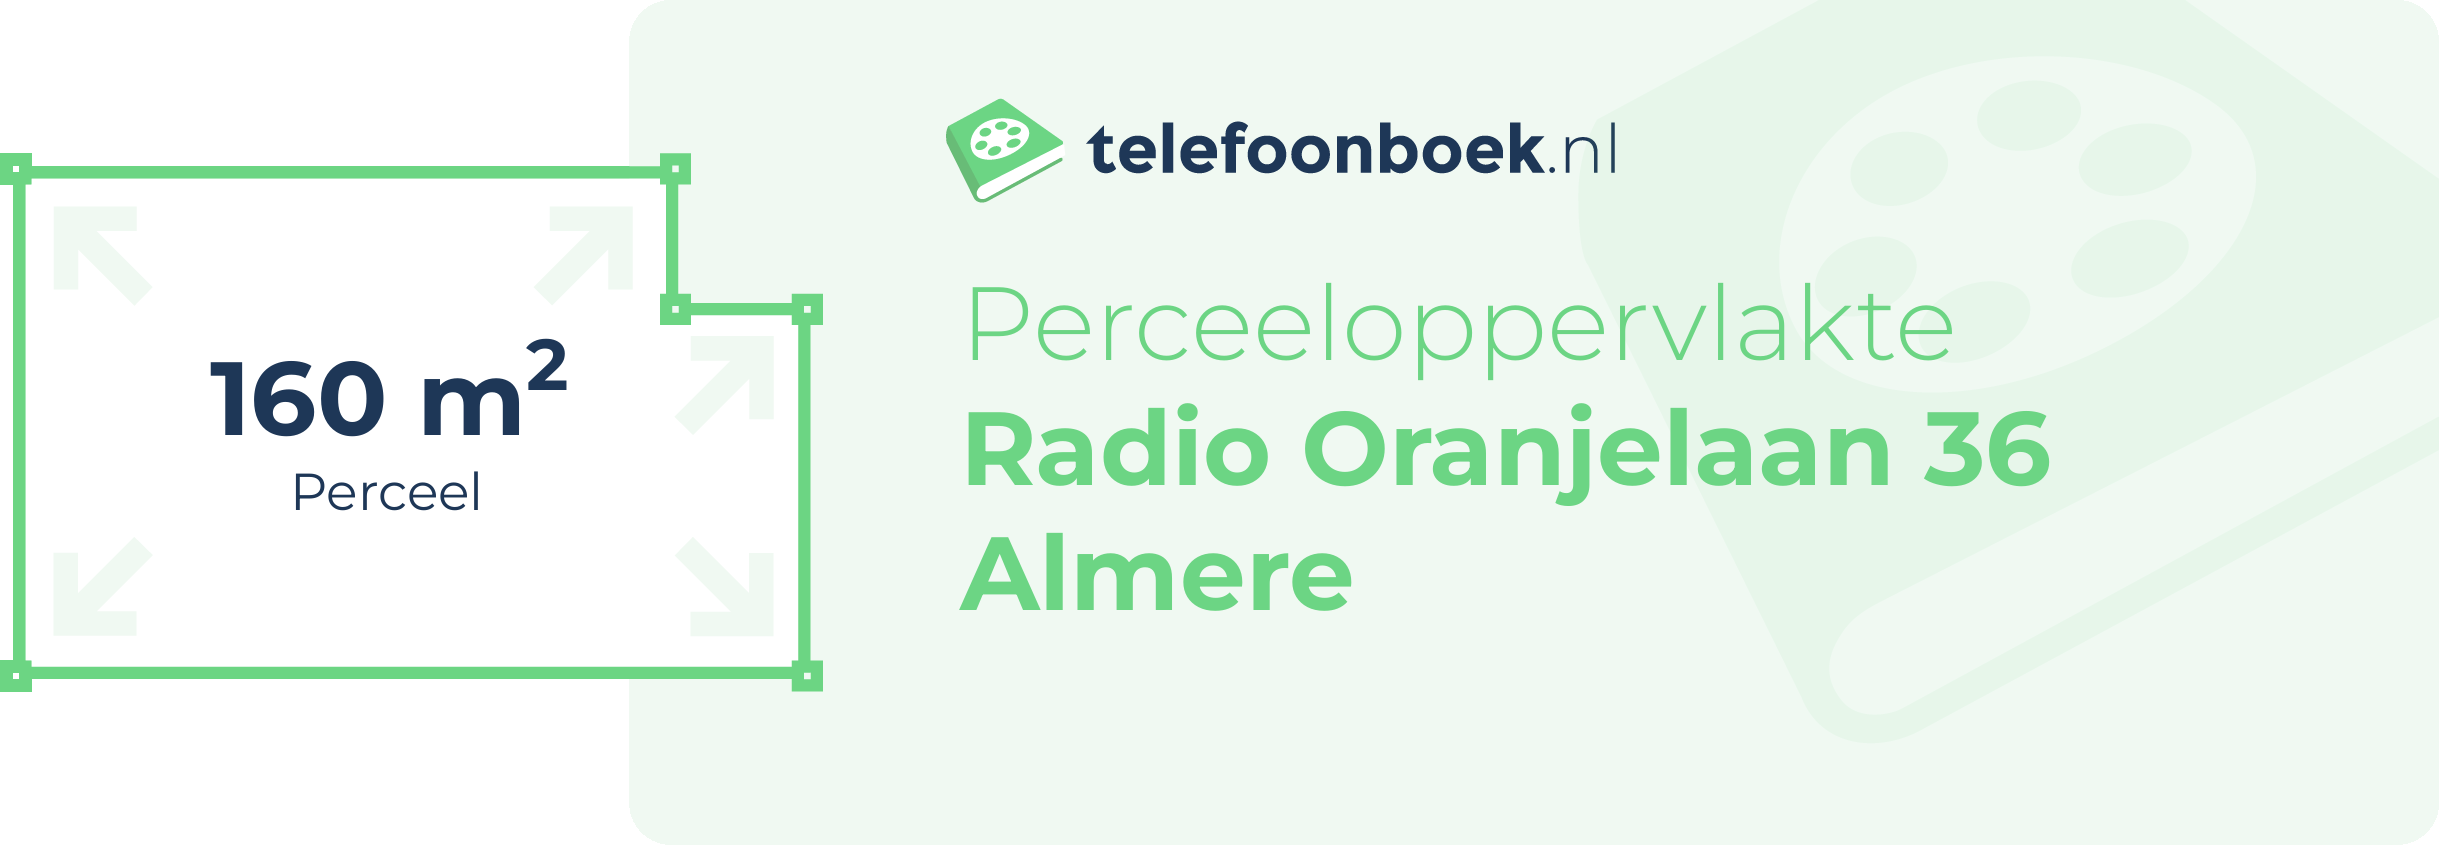 Perceeloppervlakte Radio Oranjelaan 36 Almere